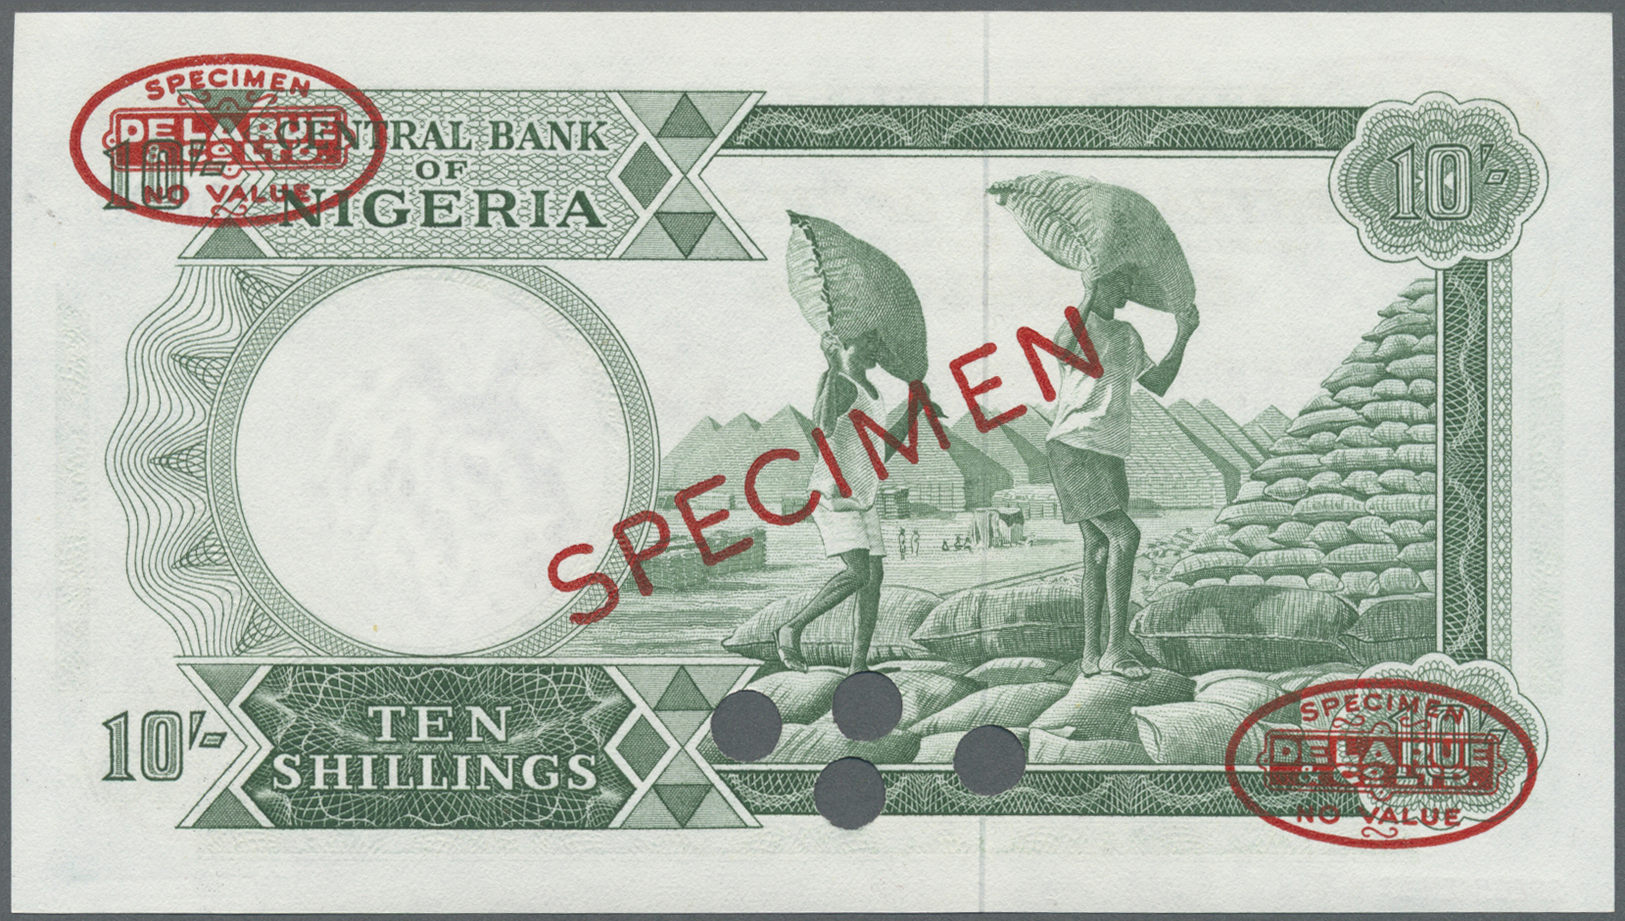 01870 Nigeria: 10 Shillings 1967 Specimen P. 7s In Condition: UNC. - Nigeria